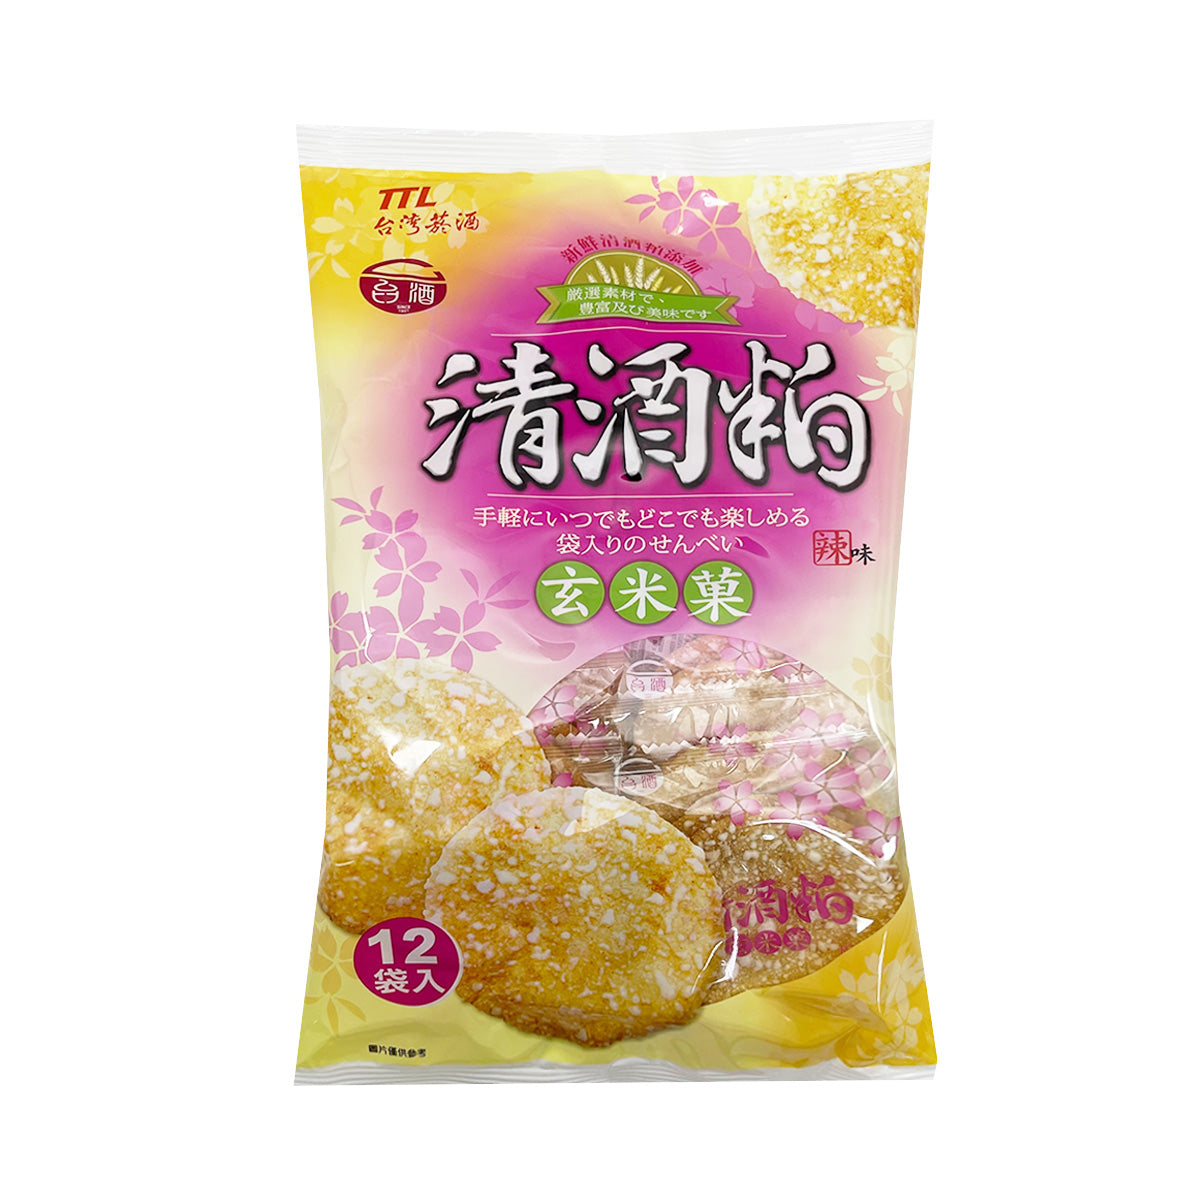 【TTL TAIWAN】 Rice Cracker (Spicy) 150g